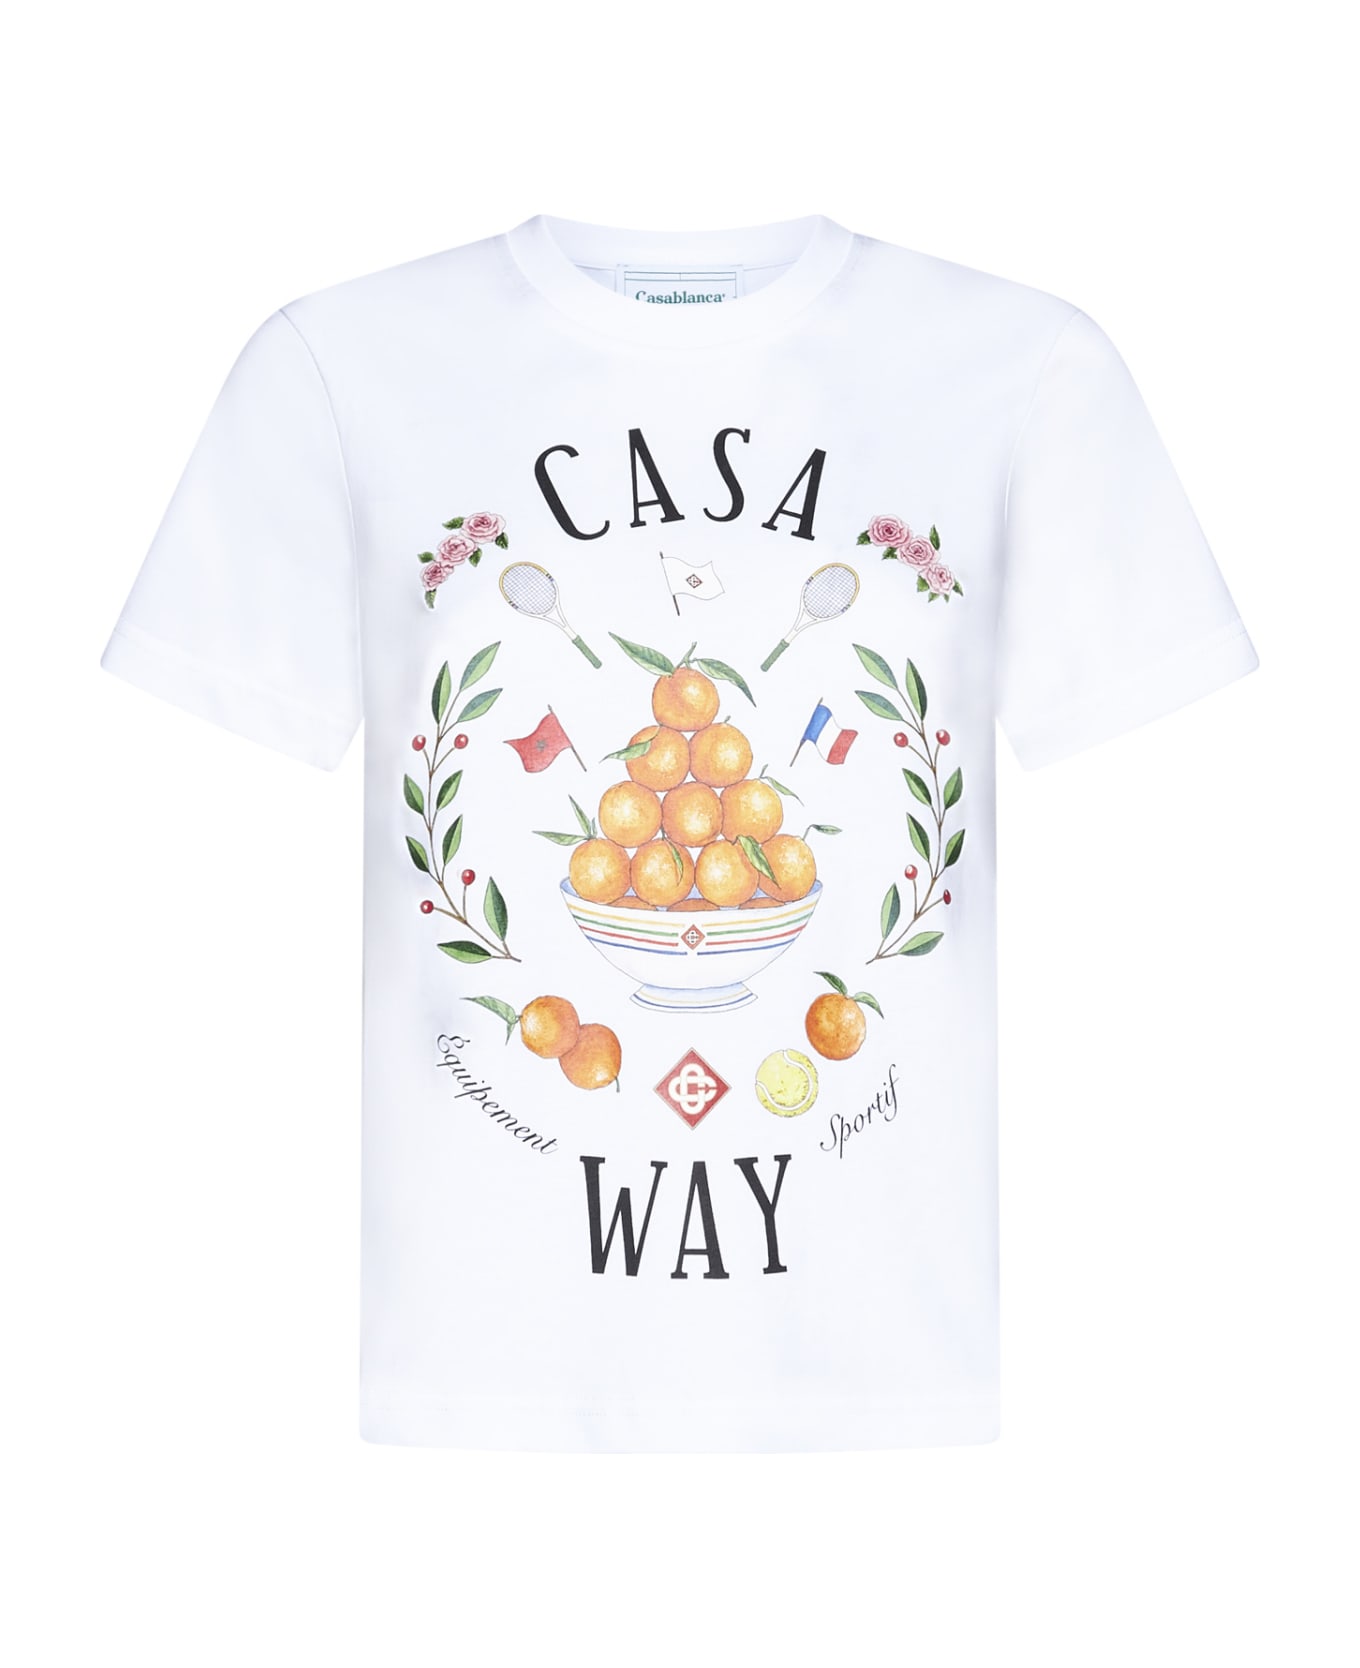 Casablanca T-Shirt - Casa way